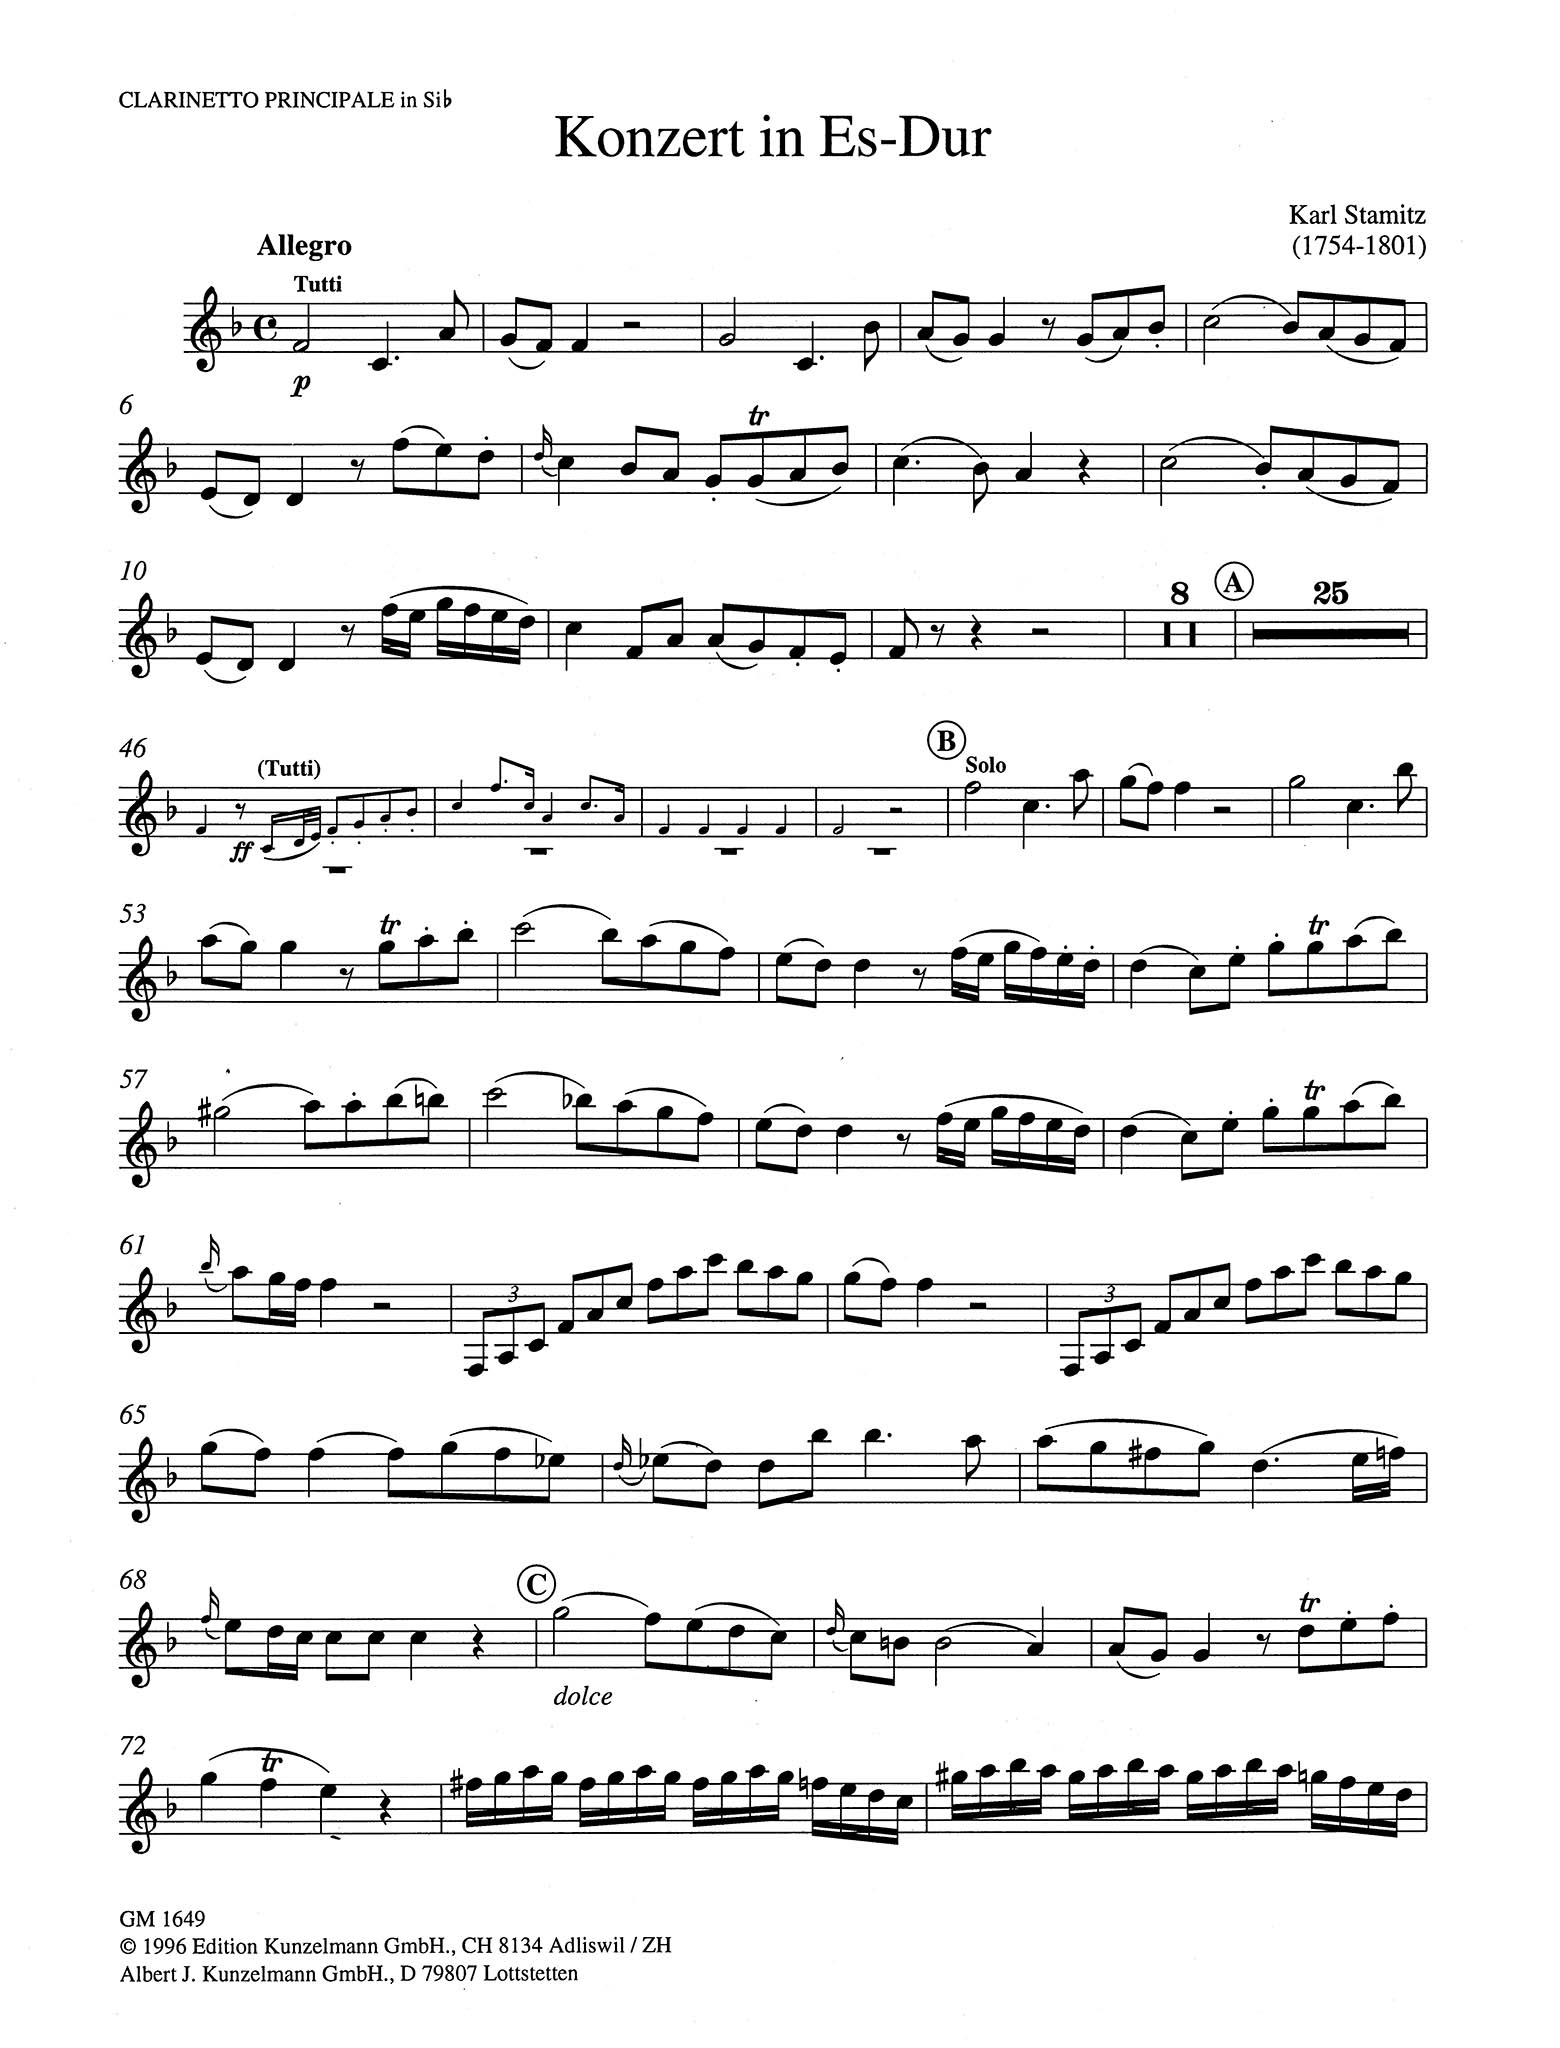 Clarinet Concerto No. 6 (Kaiser) in E-flat Major Clarinet part